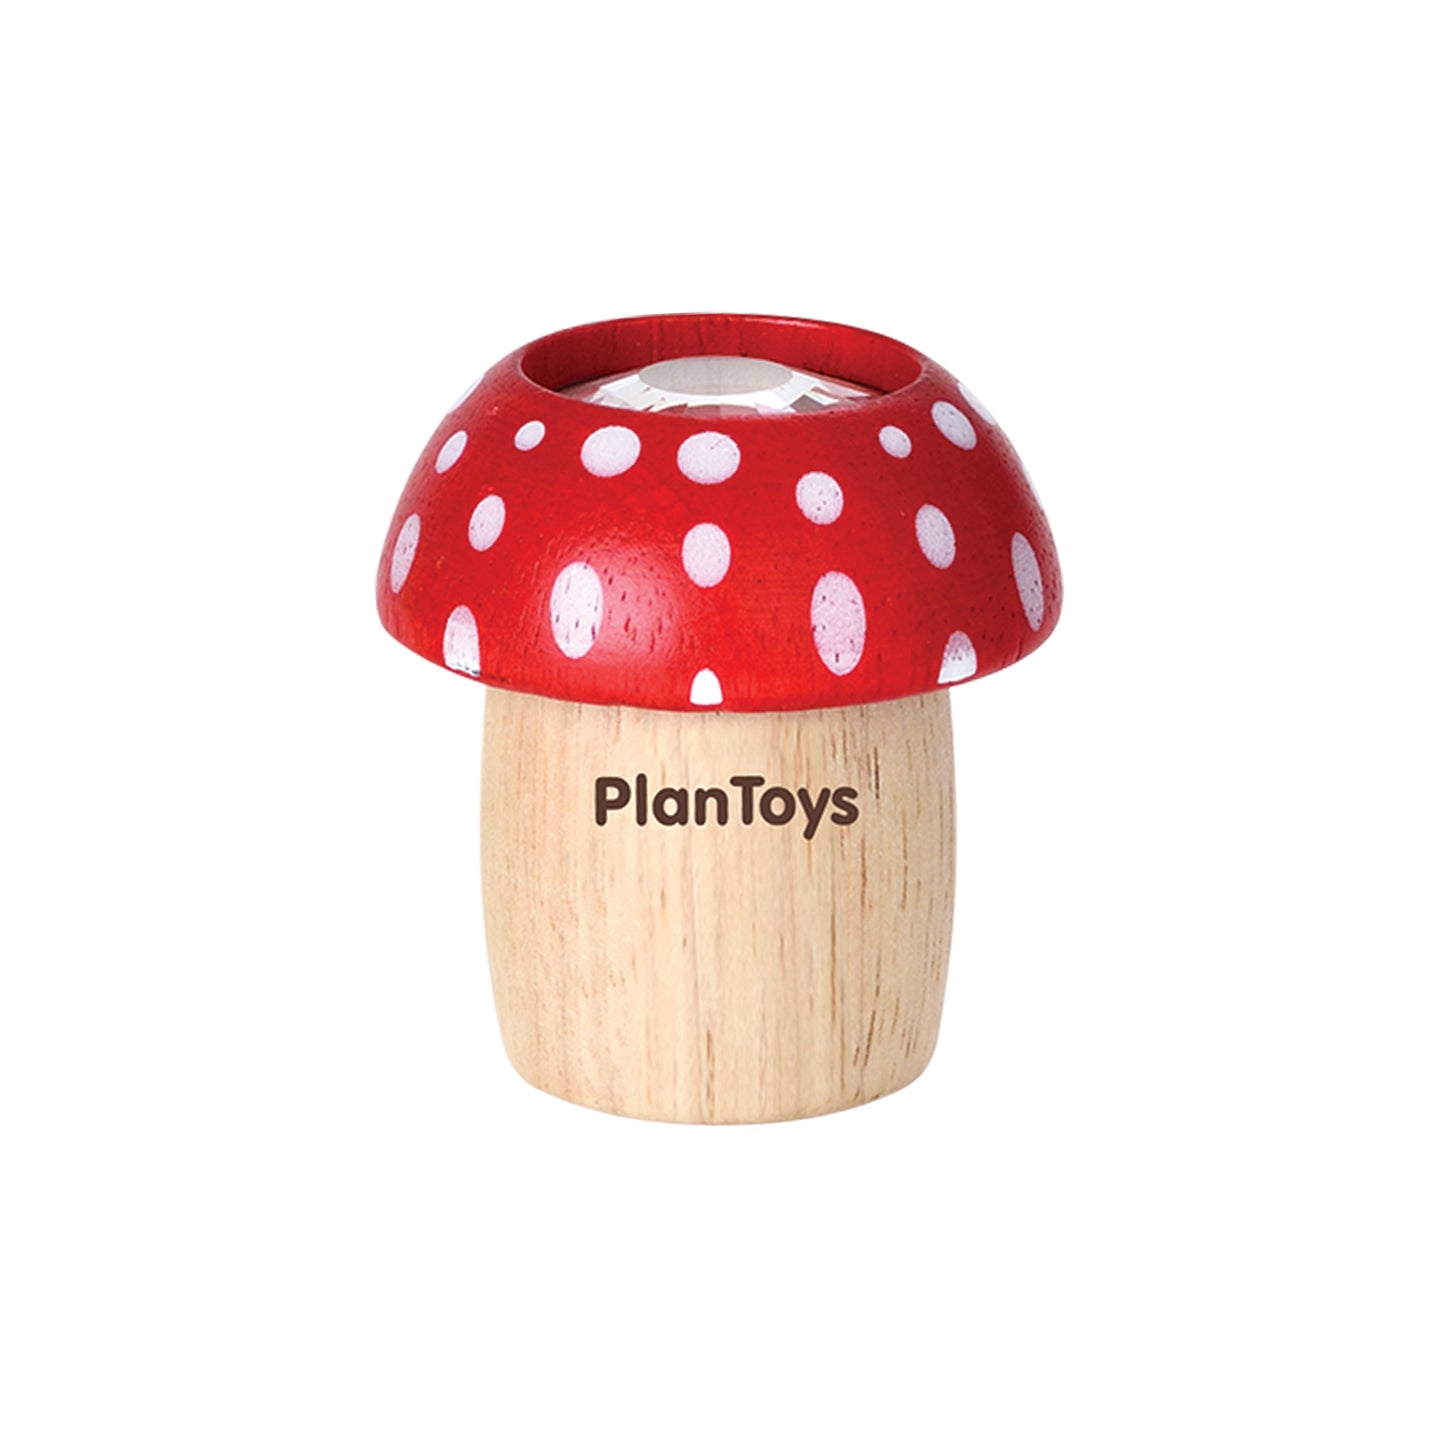 PlanToys - Mushroom kaleidoscope